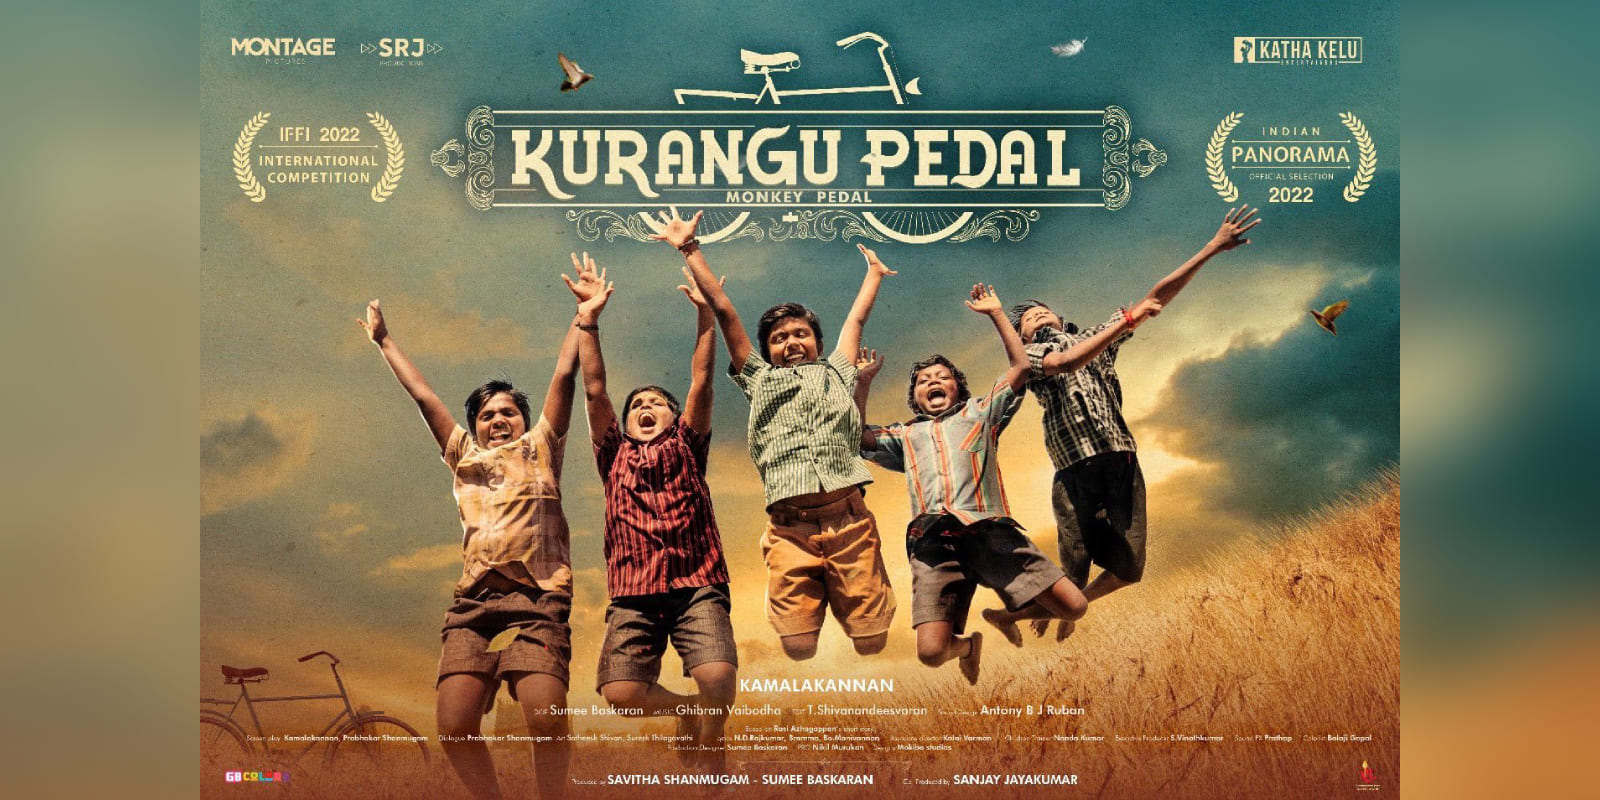 Kurangu Pedal is directed by Kamalakannan (1)